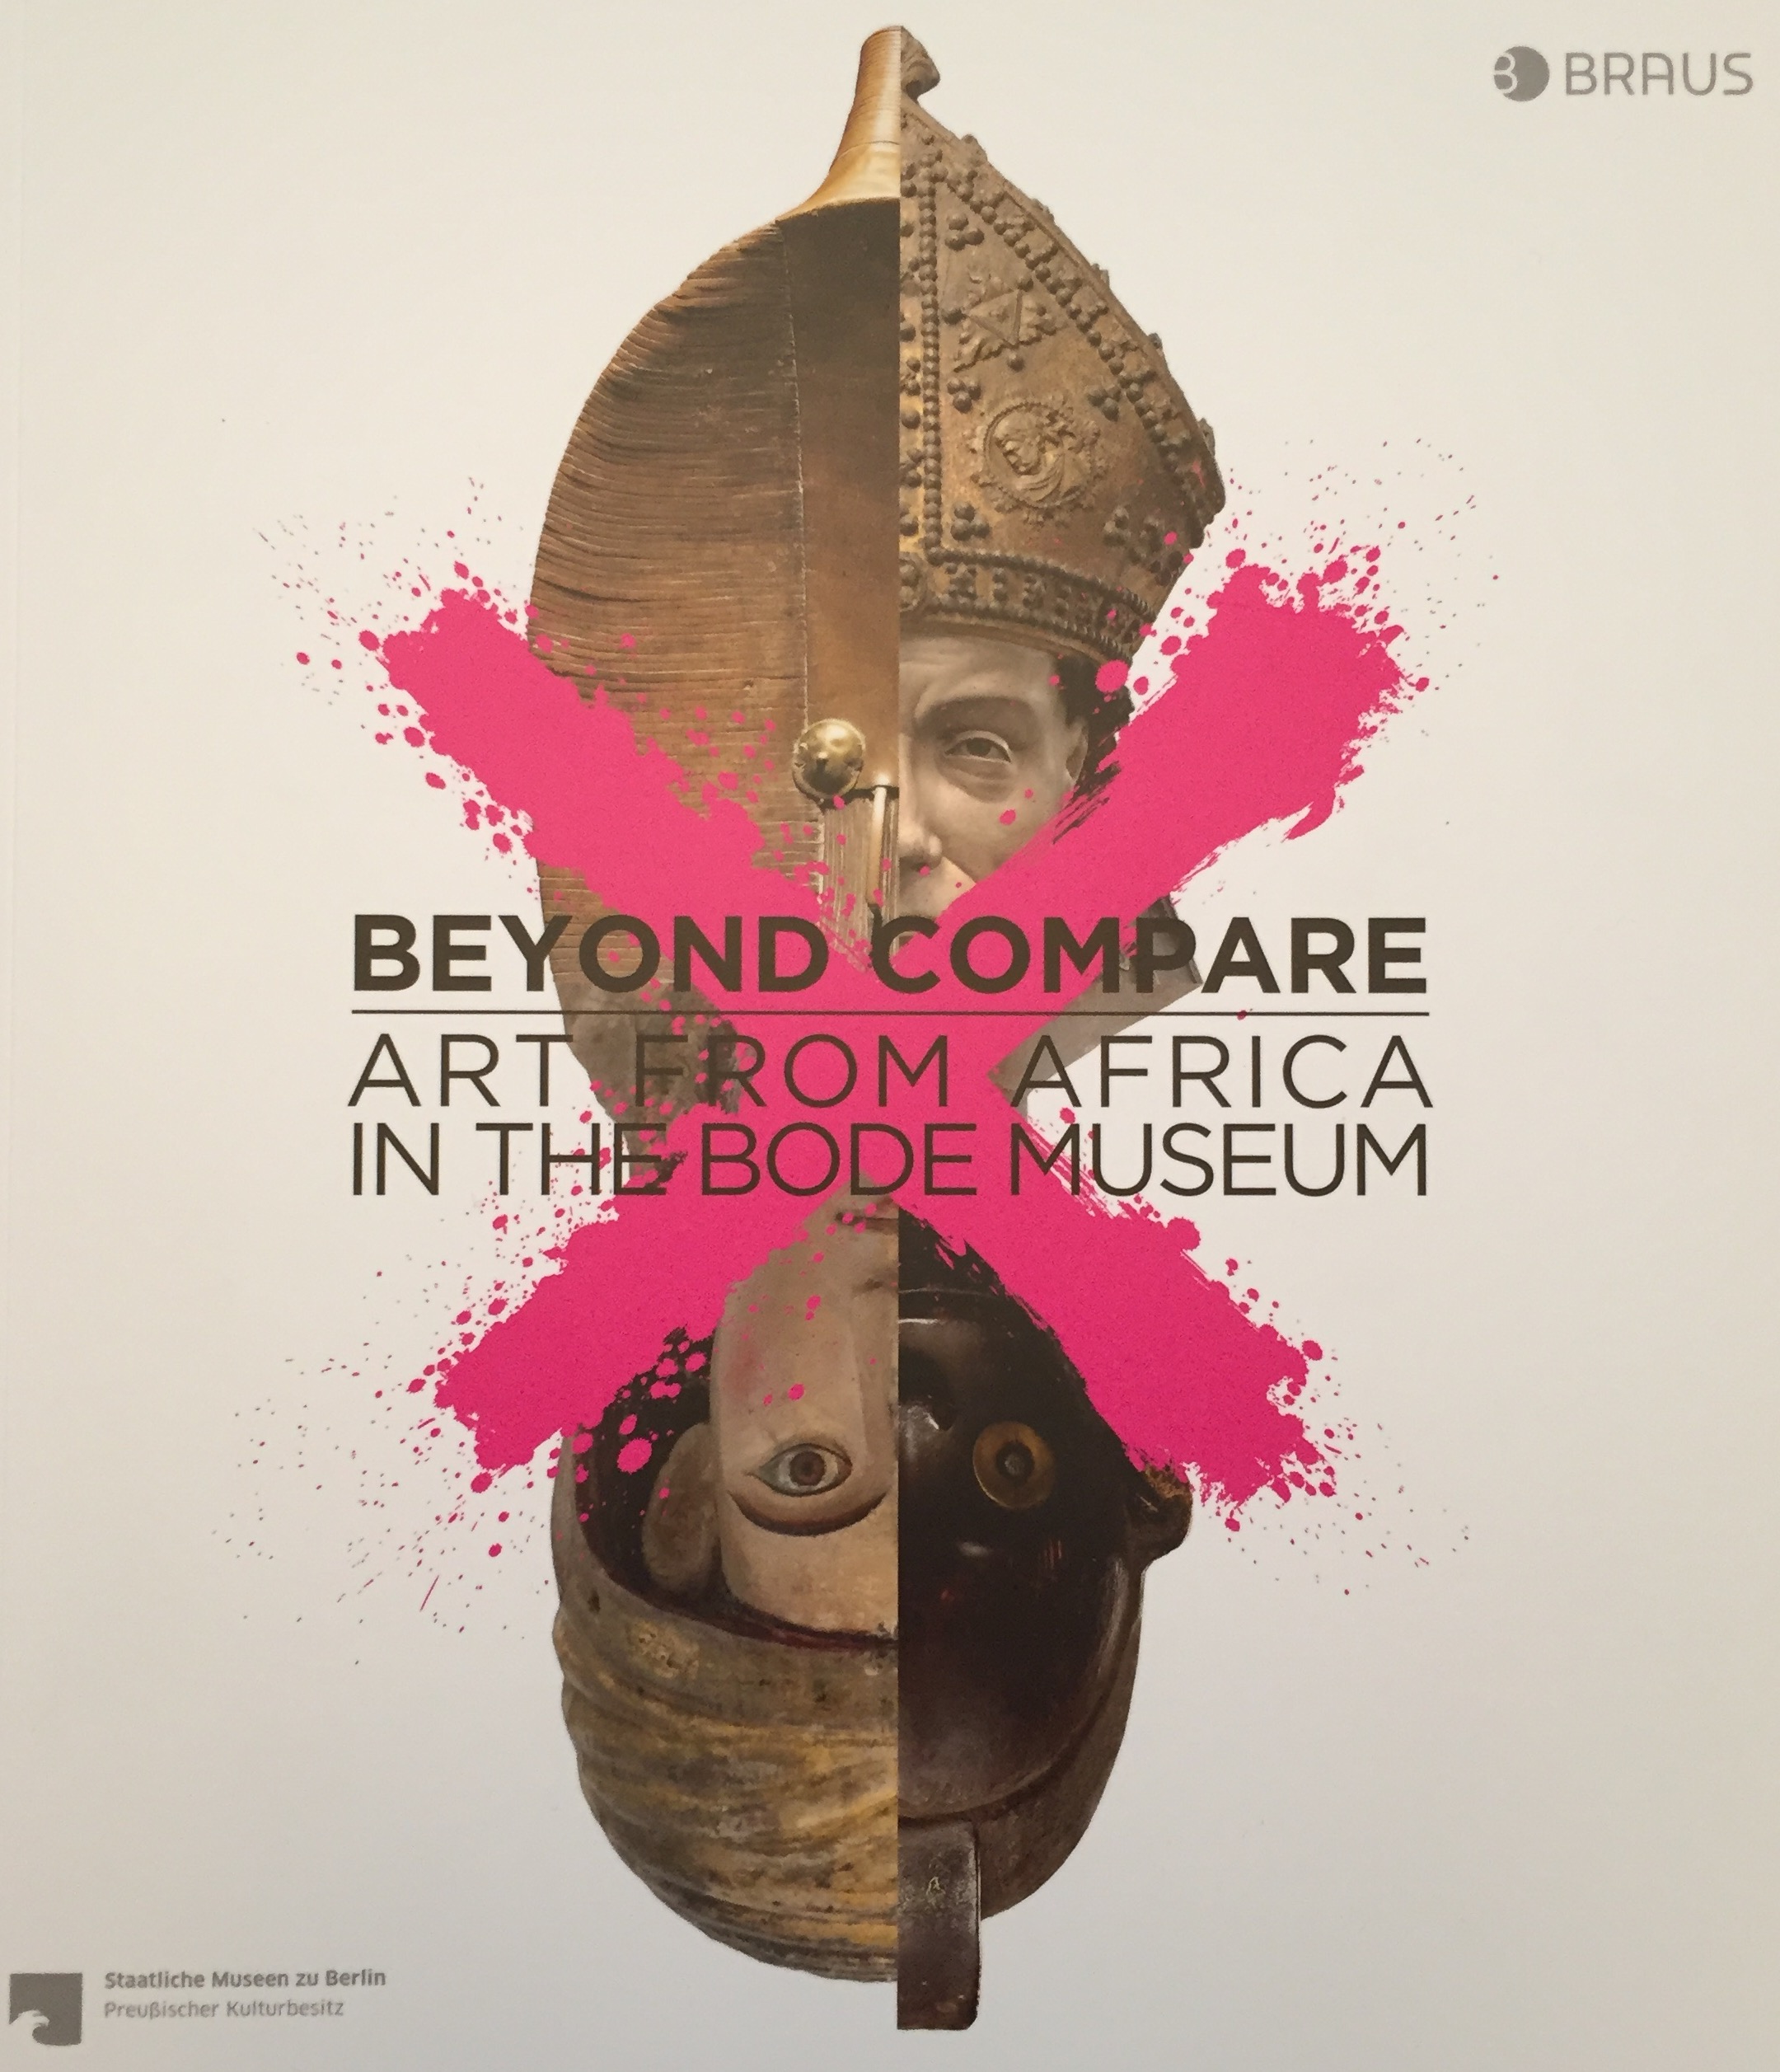 Beyond-Compare-Art-from-Africa-Bode-Museum-Berlin-Bruno-Claessens-poster-Mahongwe-Fang.jpg